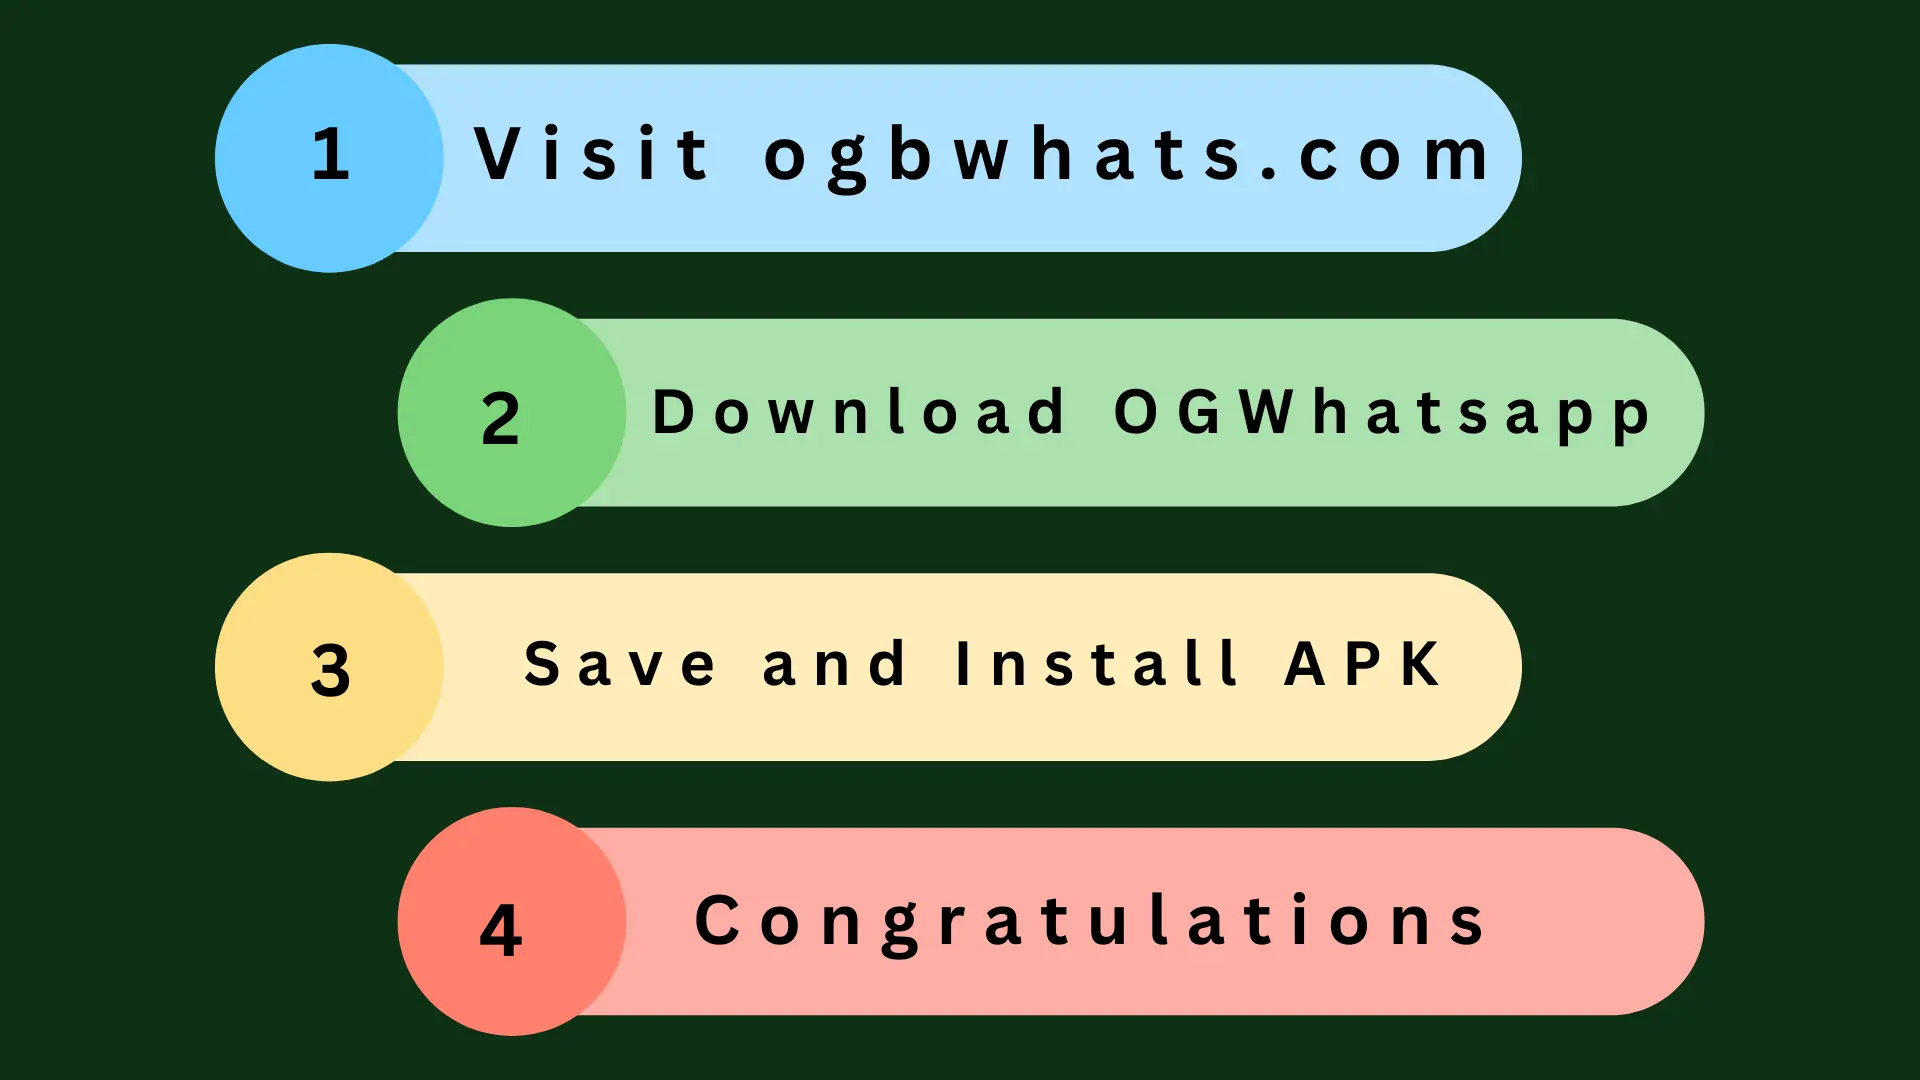 Og whatsapp installation infographic